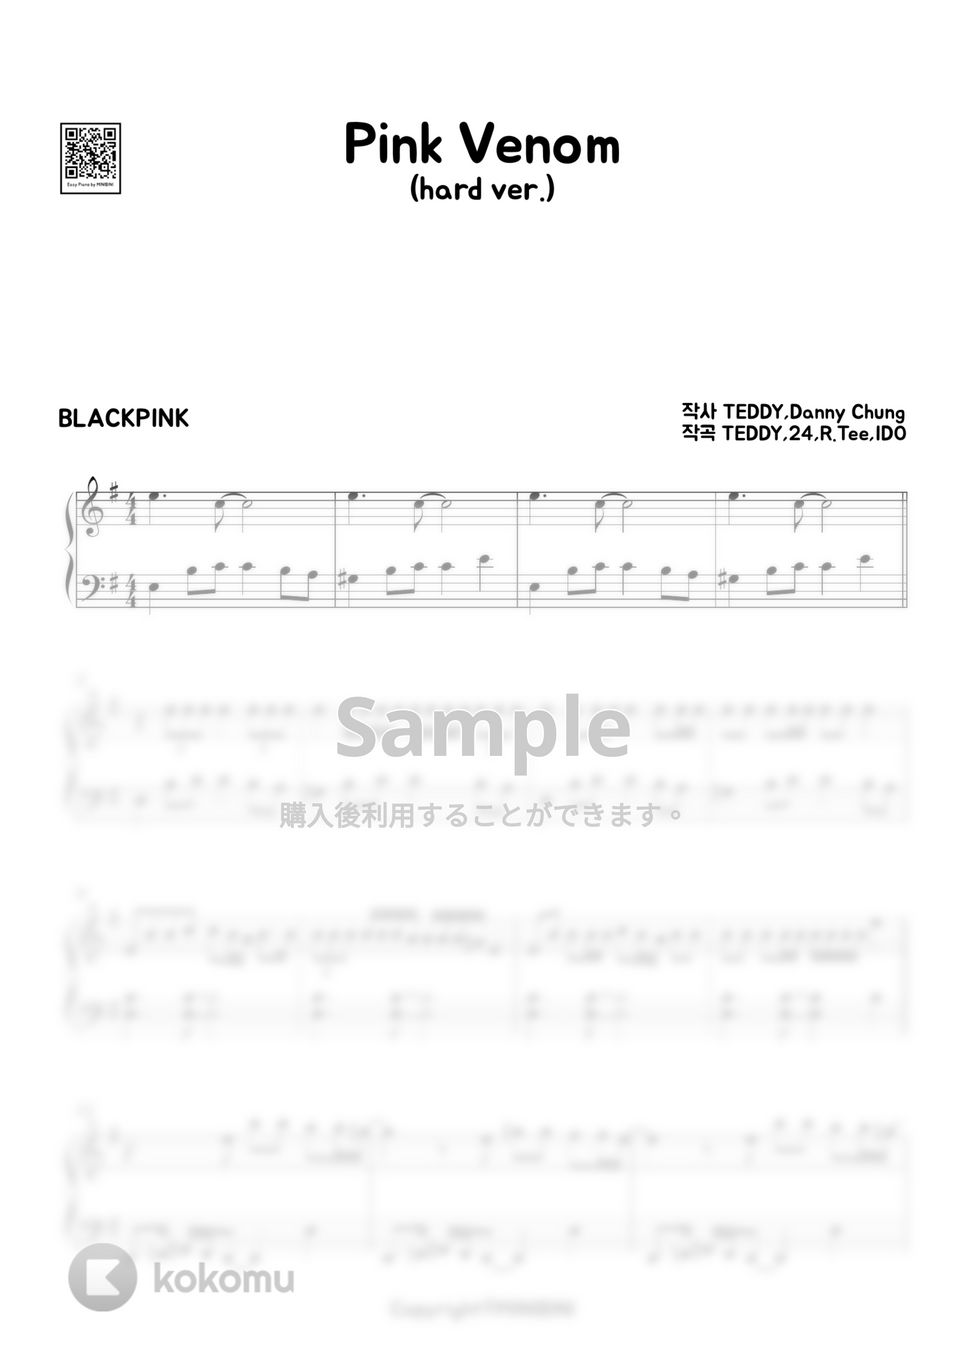 BLACKPINK - Pink Venom (Hard ver.) by MINIBINI